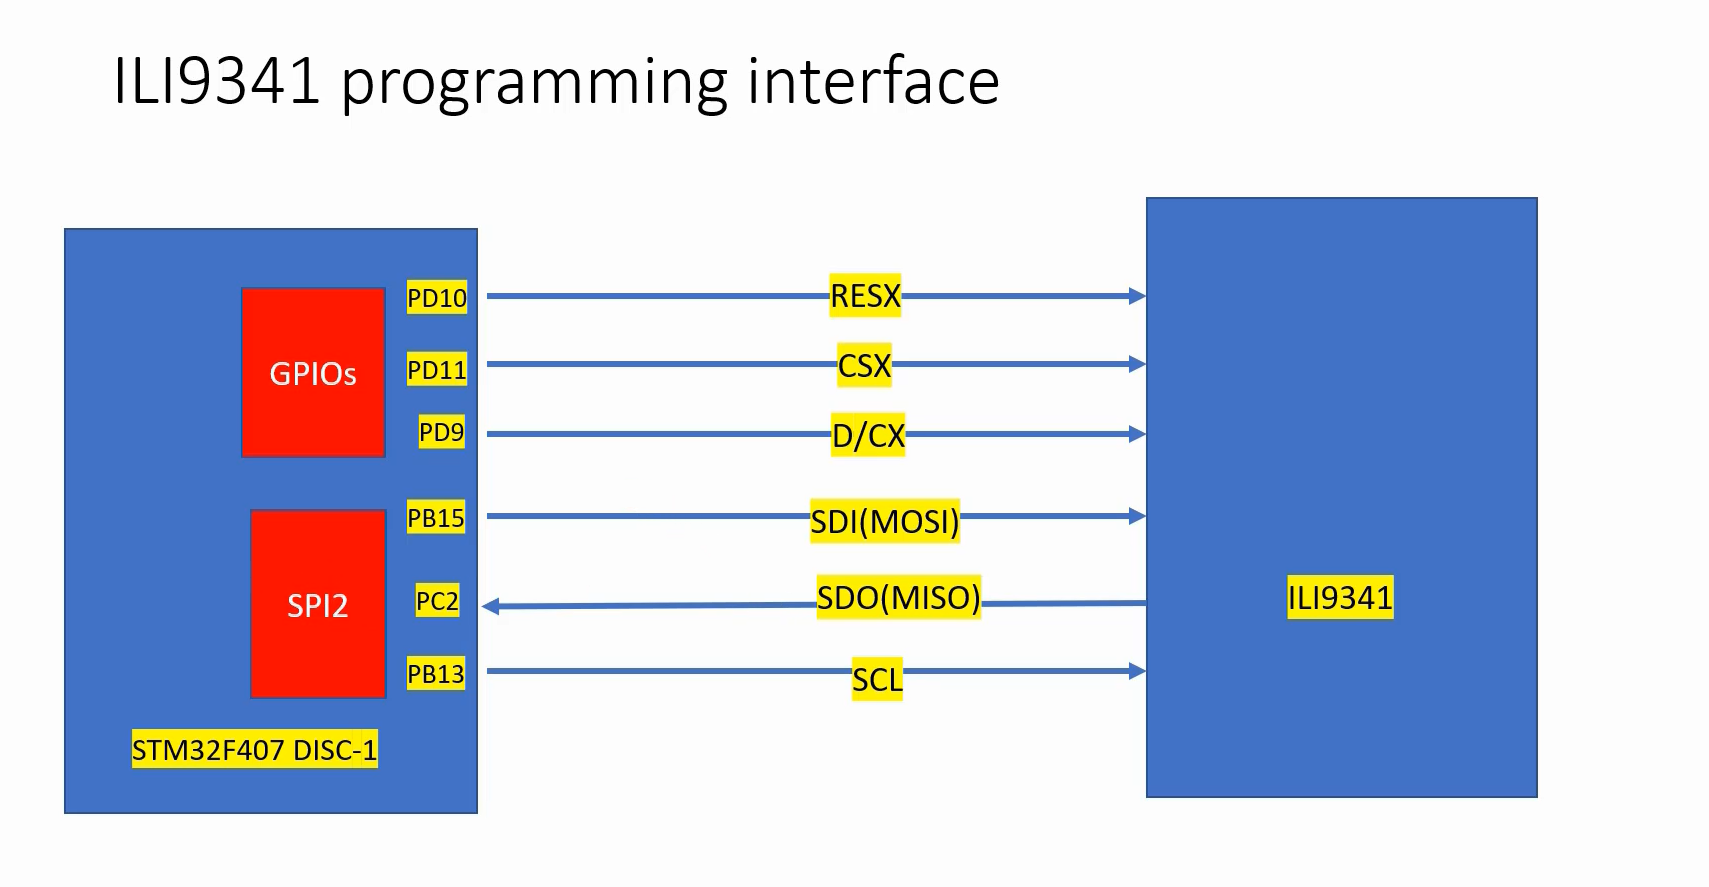 Figure 4. ILI9341 programming interface